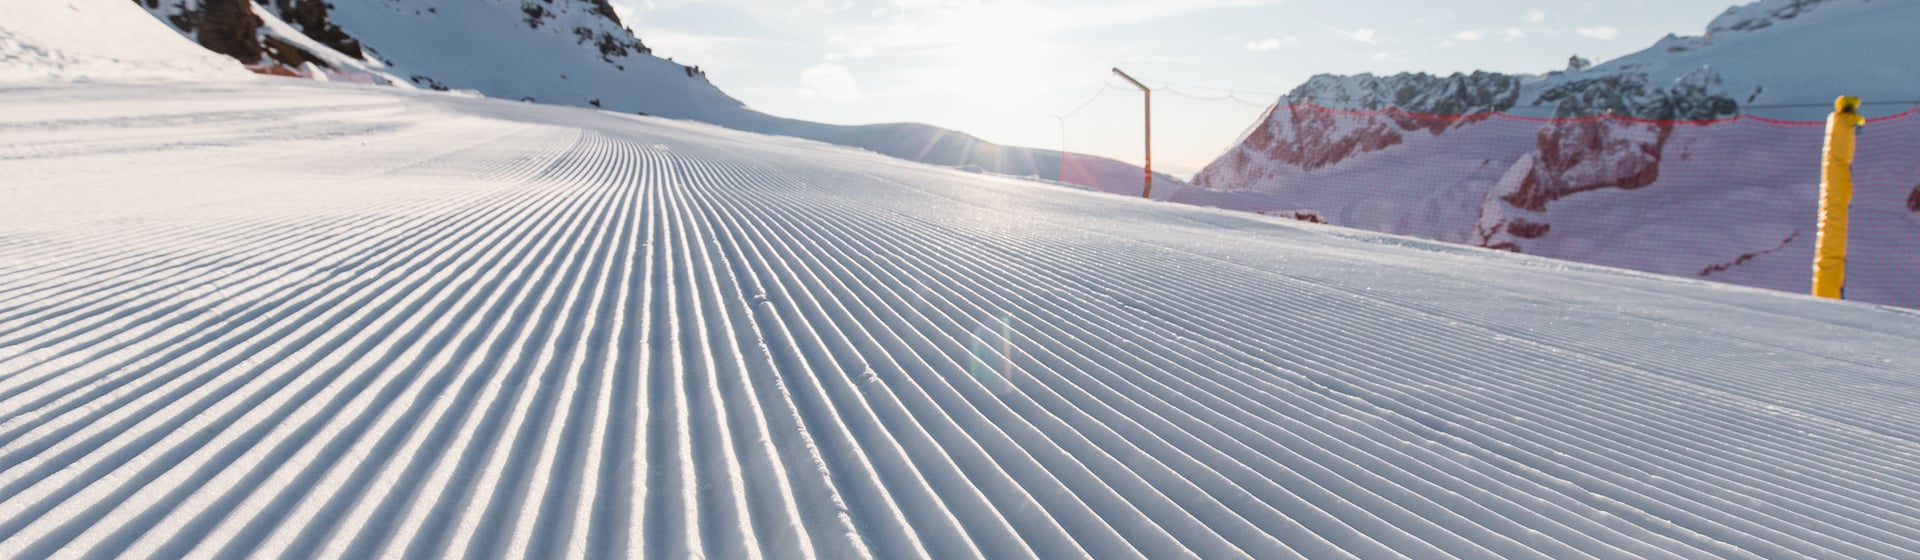 Arabba: ski season extended until Easter Monday 18/04/2022